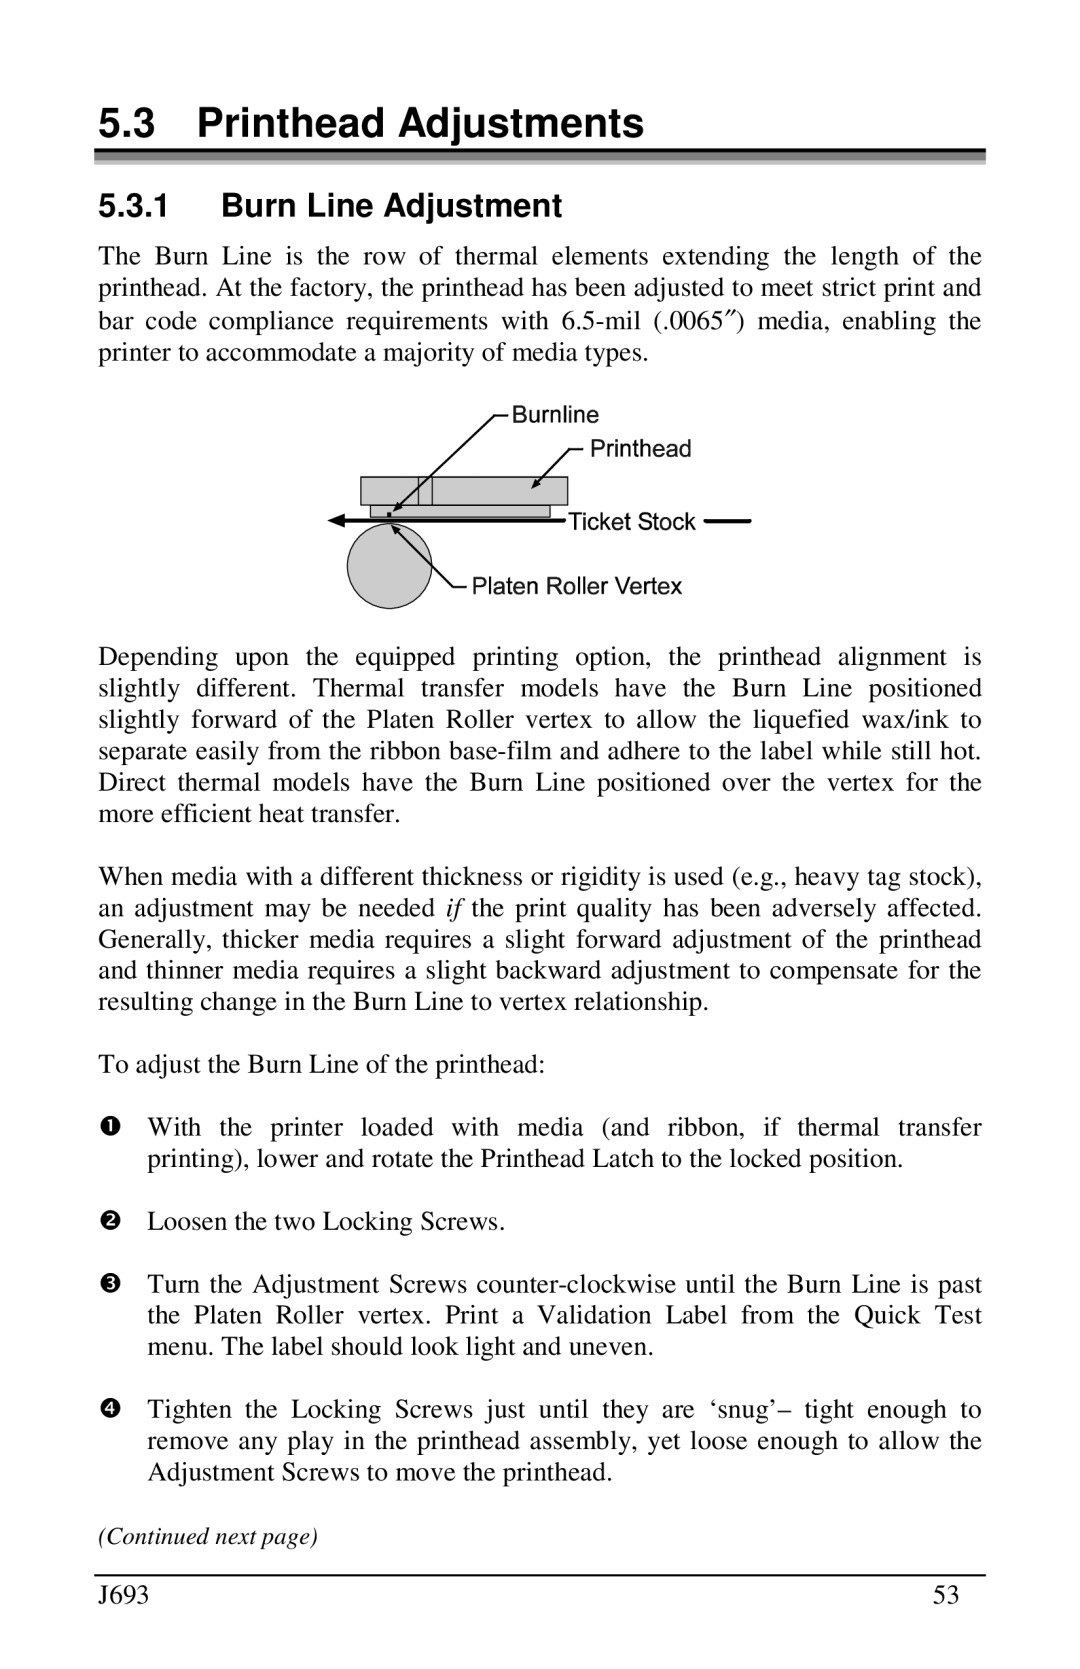 Pitney Bowes J693 manual Printhead Adjustments, Burn Line Adjustment 